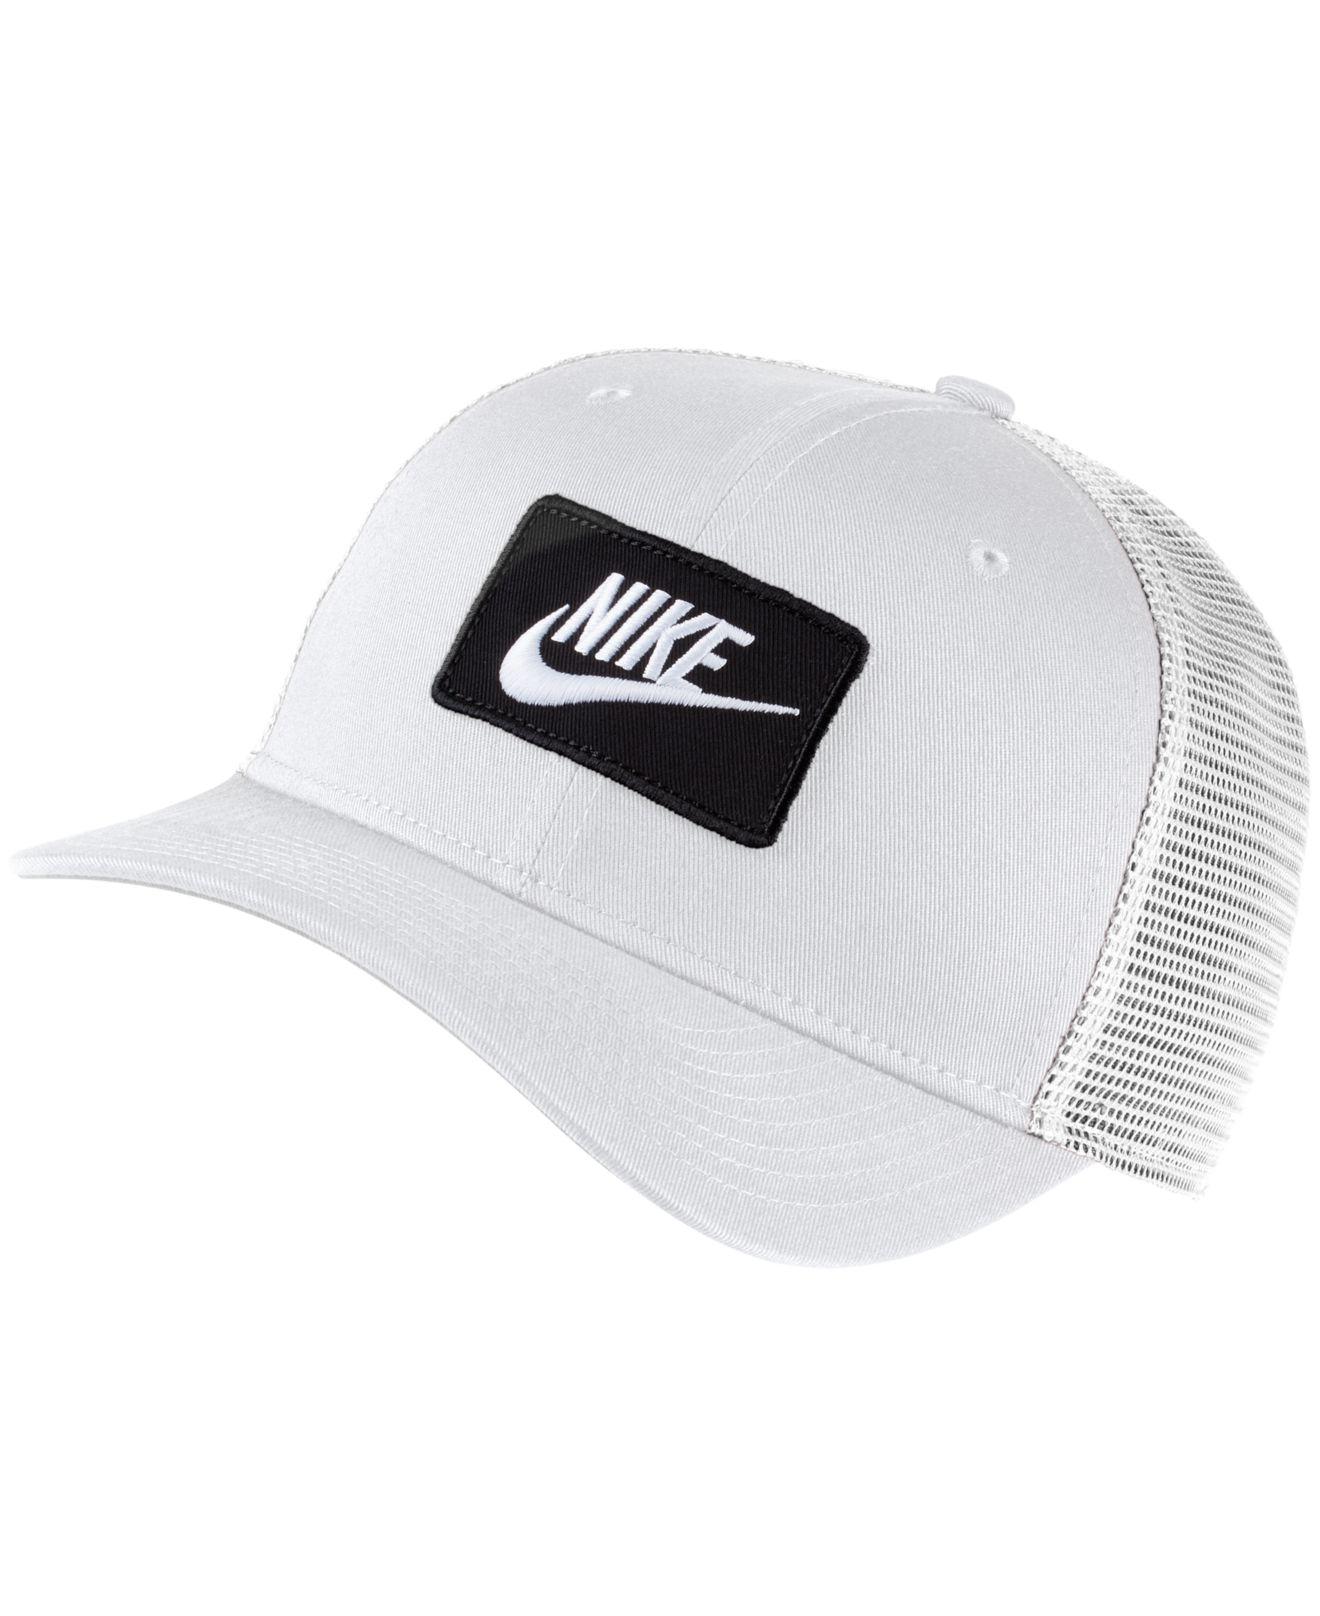 black and white nike trucker hat